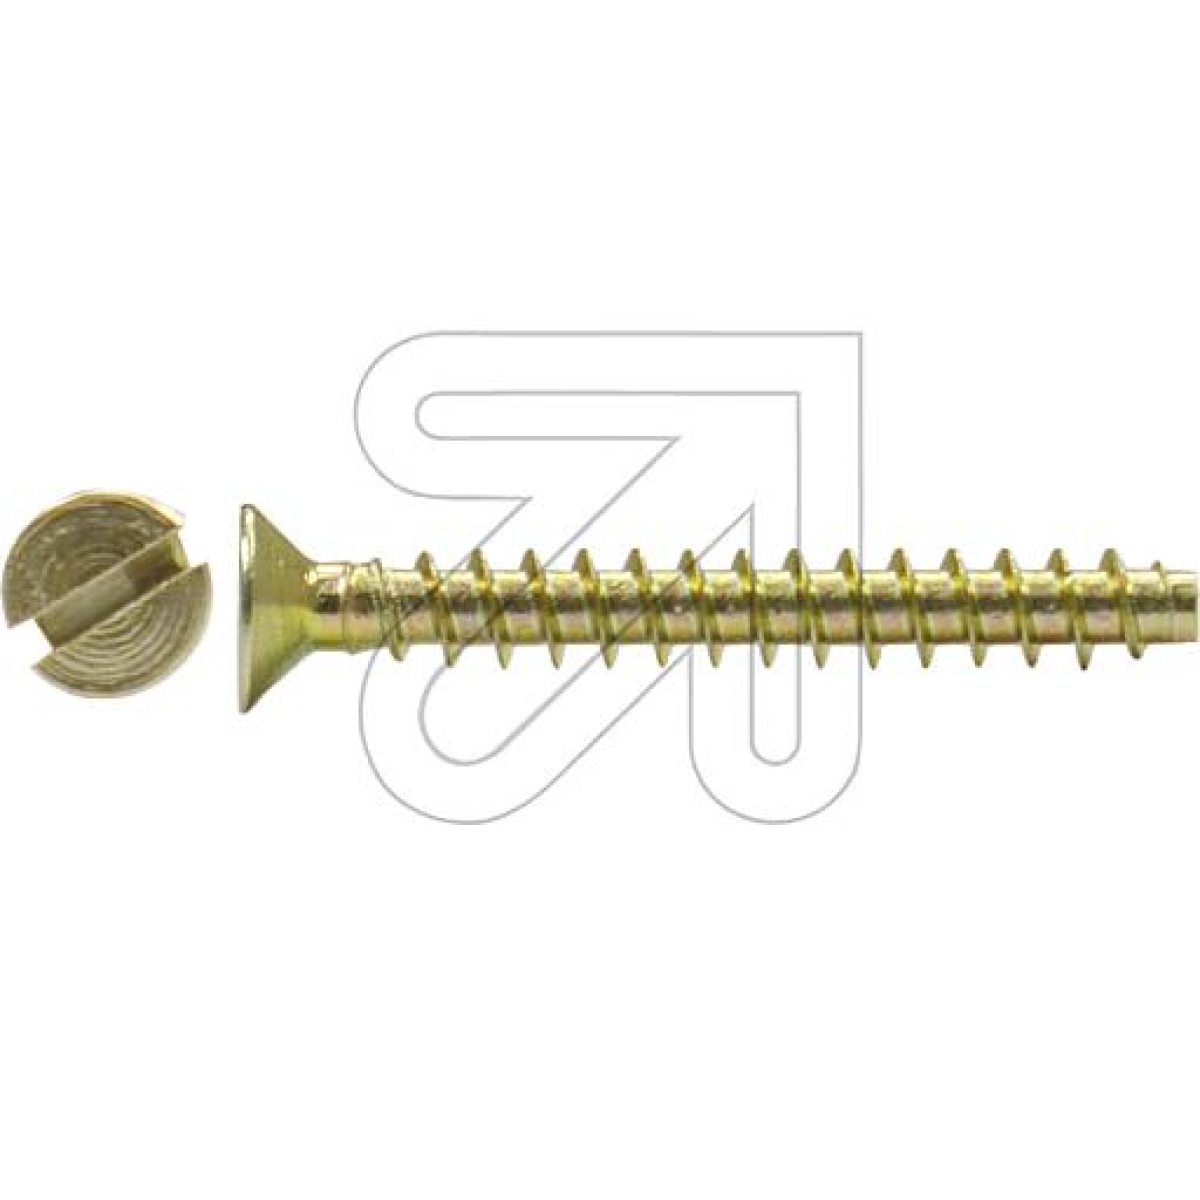 EGBDevice screws 3.2 x 25mm E152/25-Price for 50 pcs.Article-No: 141455L